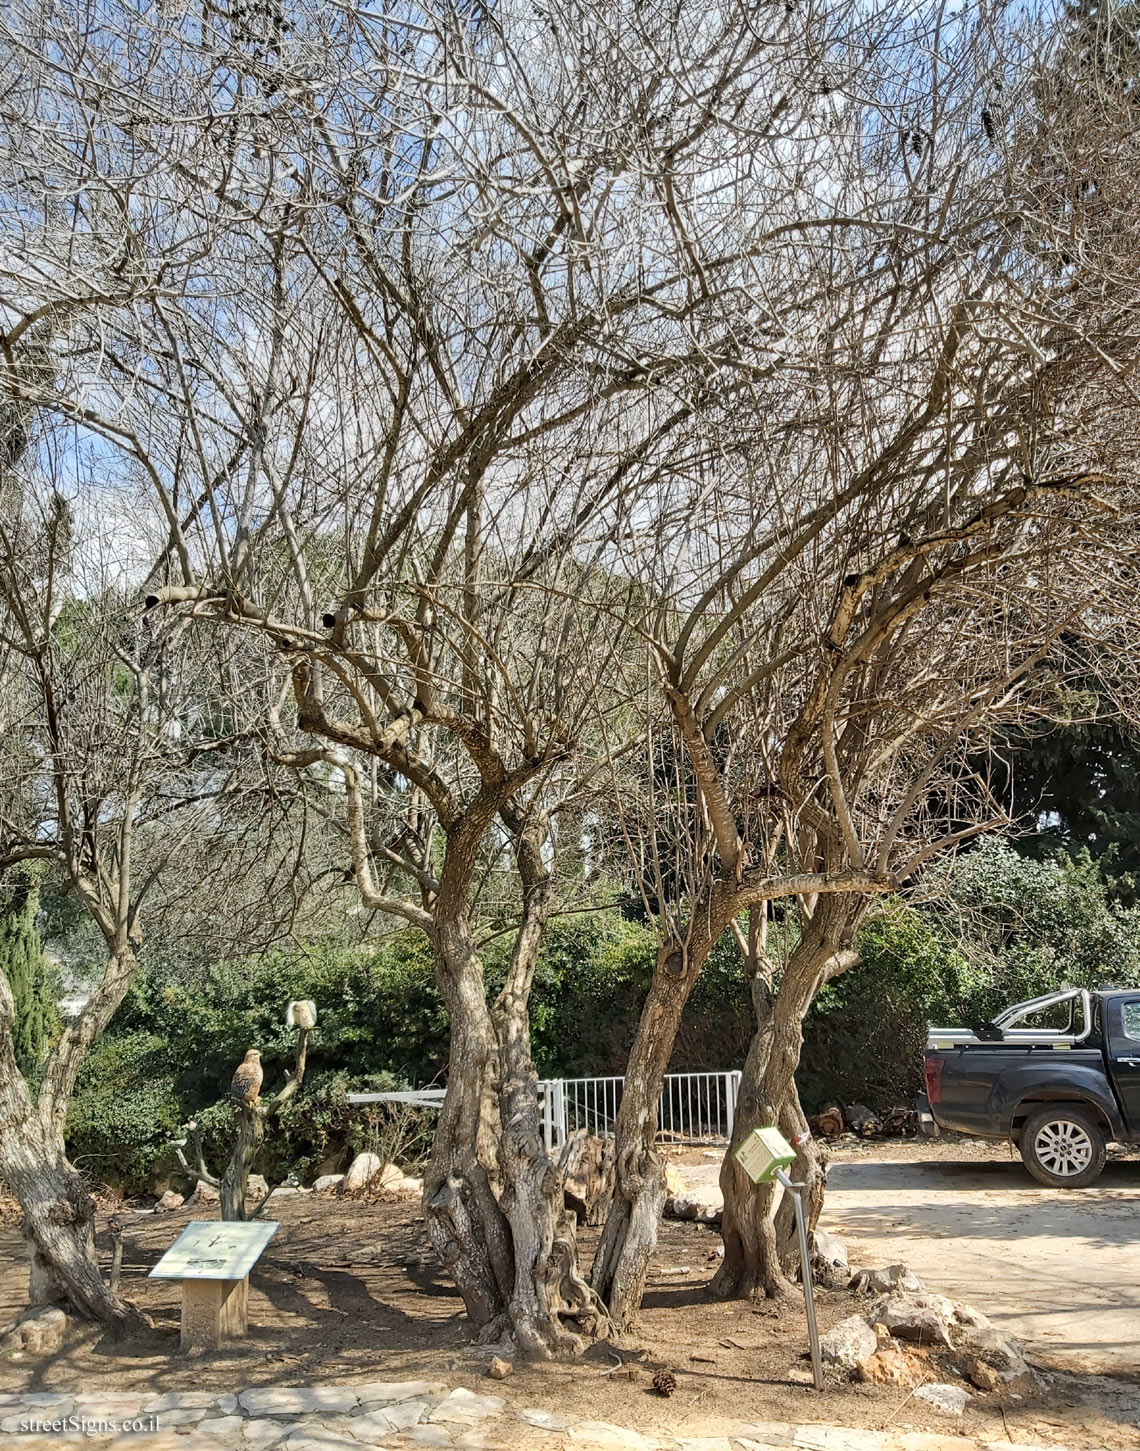 The Hebrew University of Jerusalem - Discovery Tree Walk -Chaste tree - Safra Campus